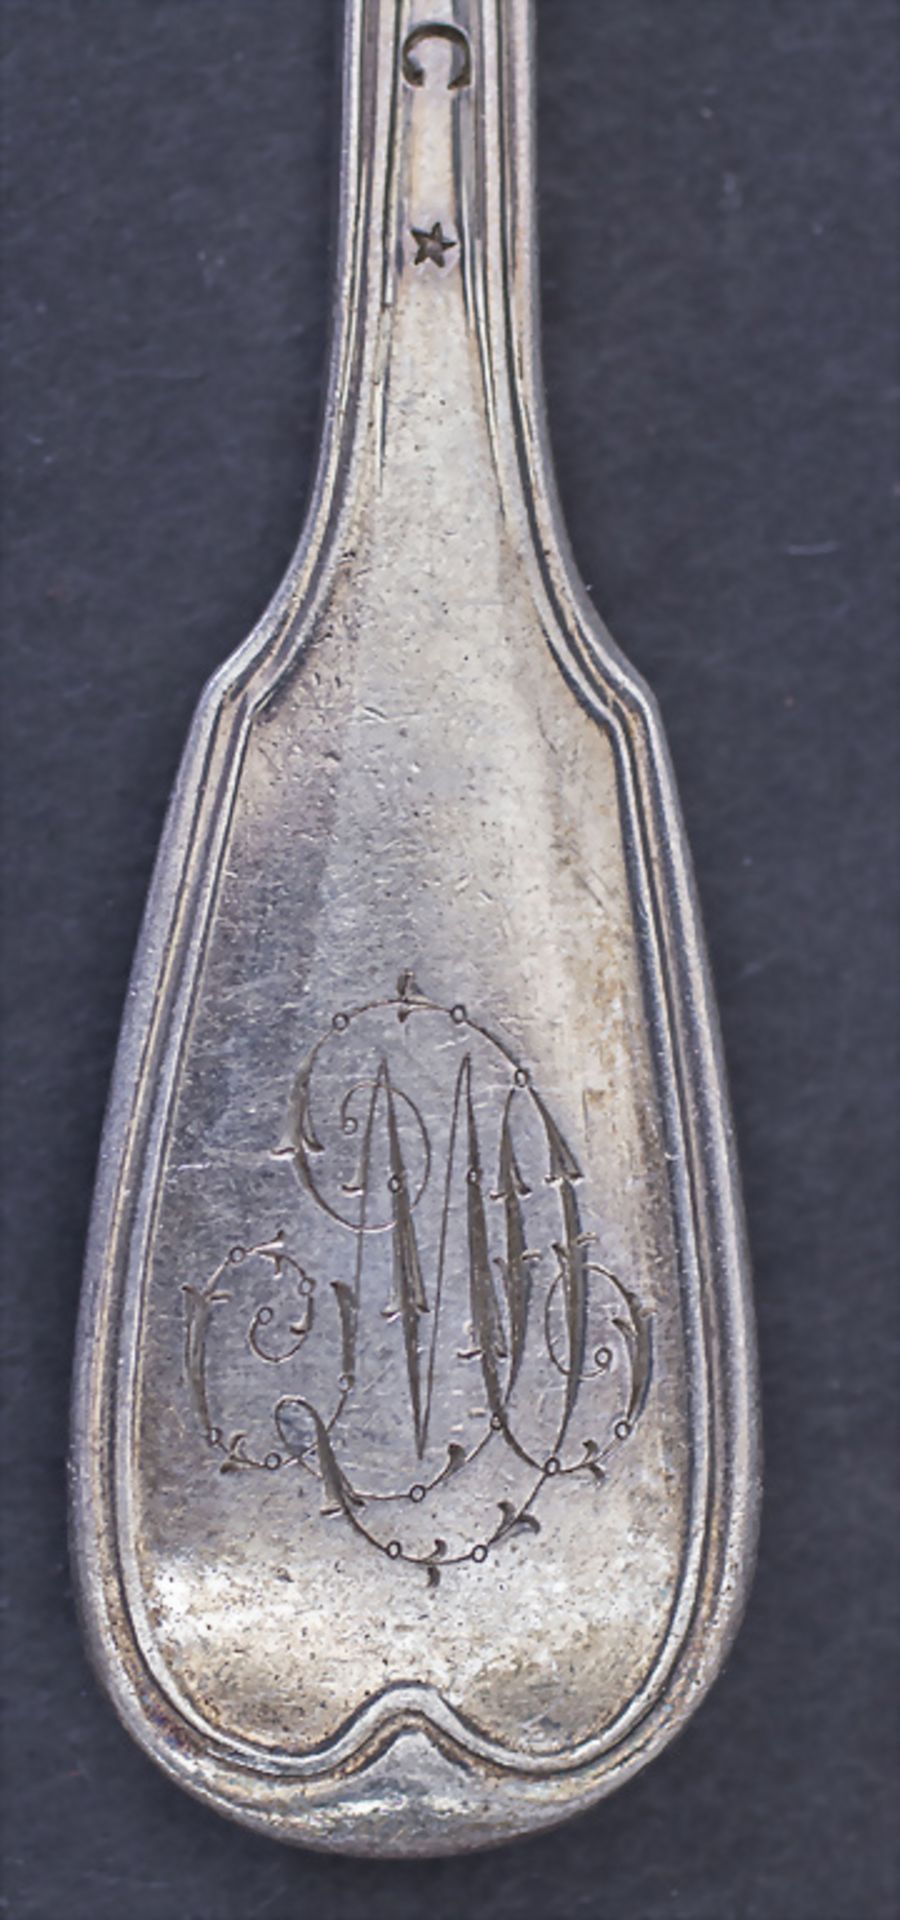 12-tlg. Silberbesteck / A 12-piece set of silver cutlery, J.L. Tardiou, Paris, nach 1819 - Bild 6 aus 6